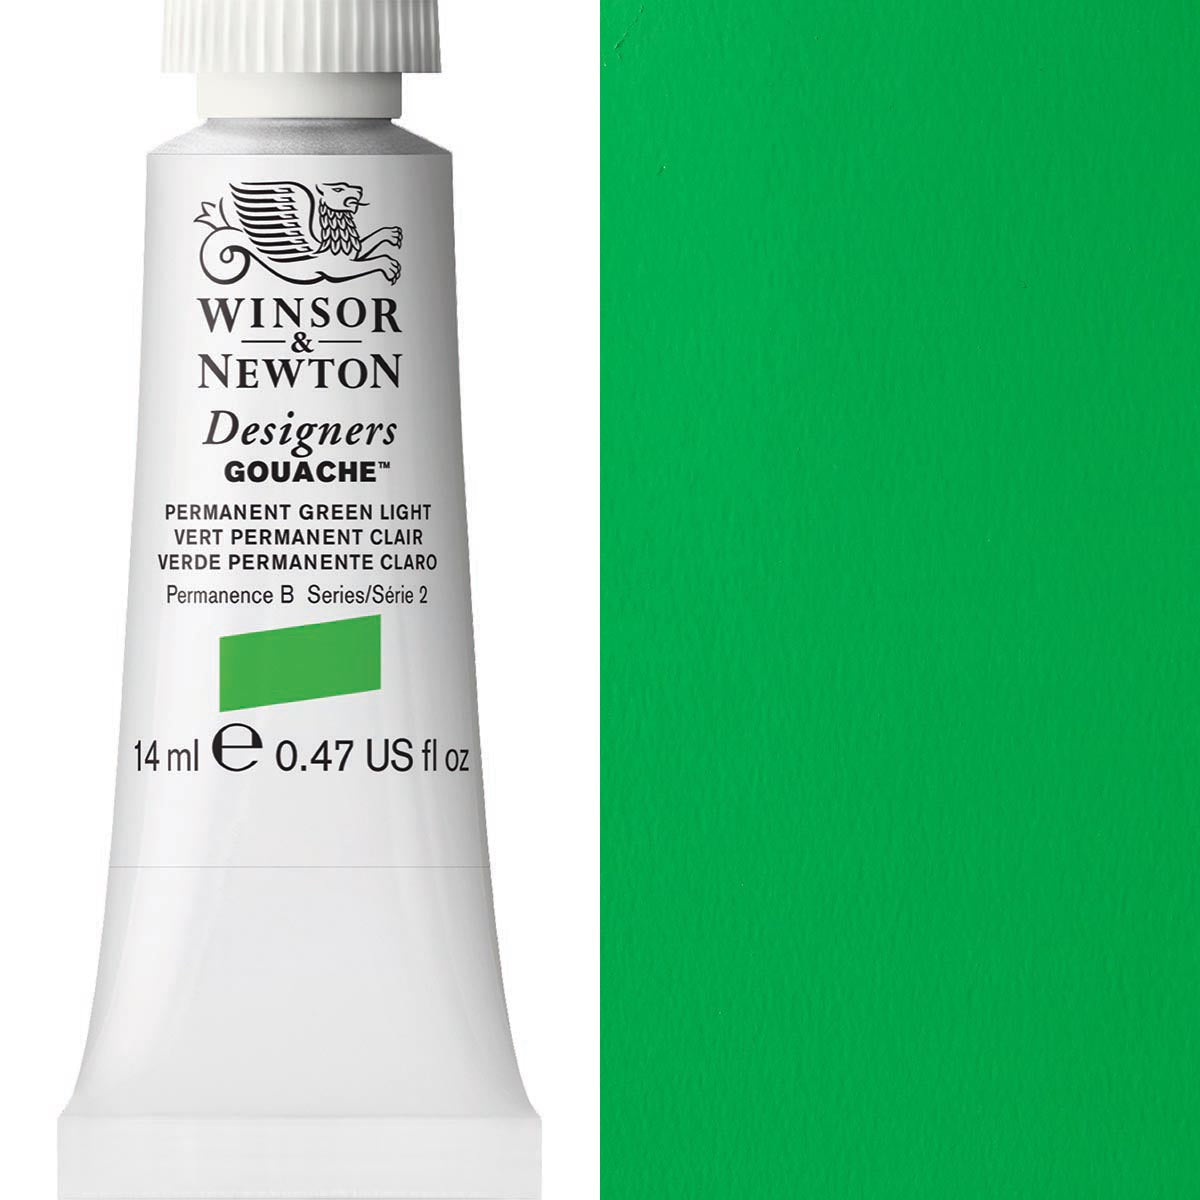 Winsor and Newton - Designers Gouache - 14ml - Permanent Green Light